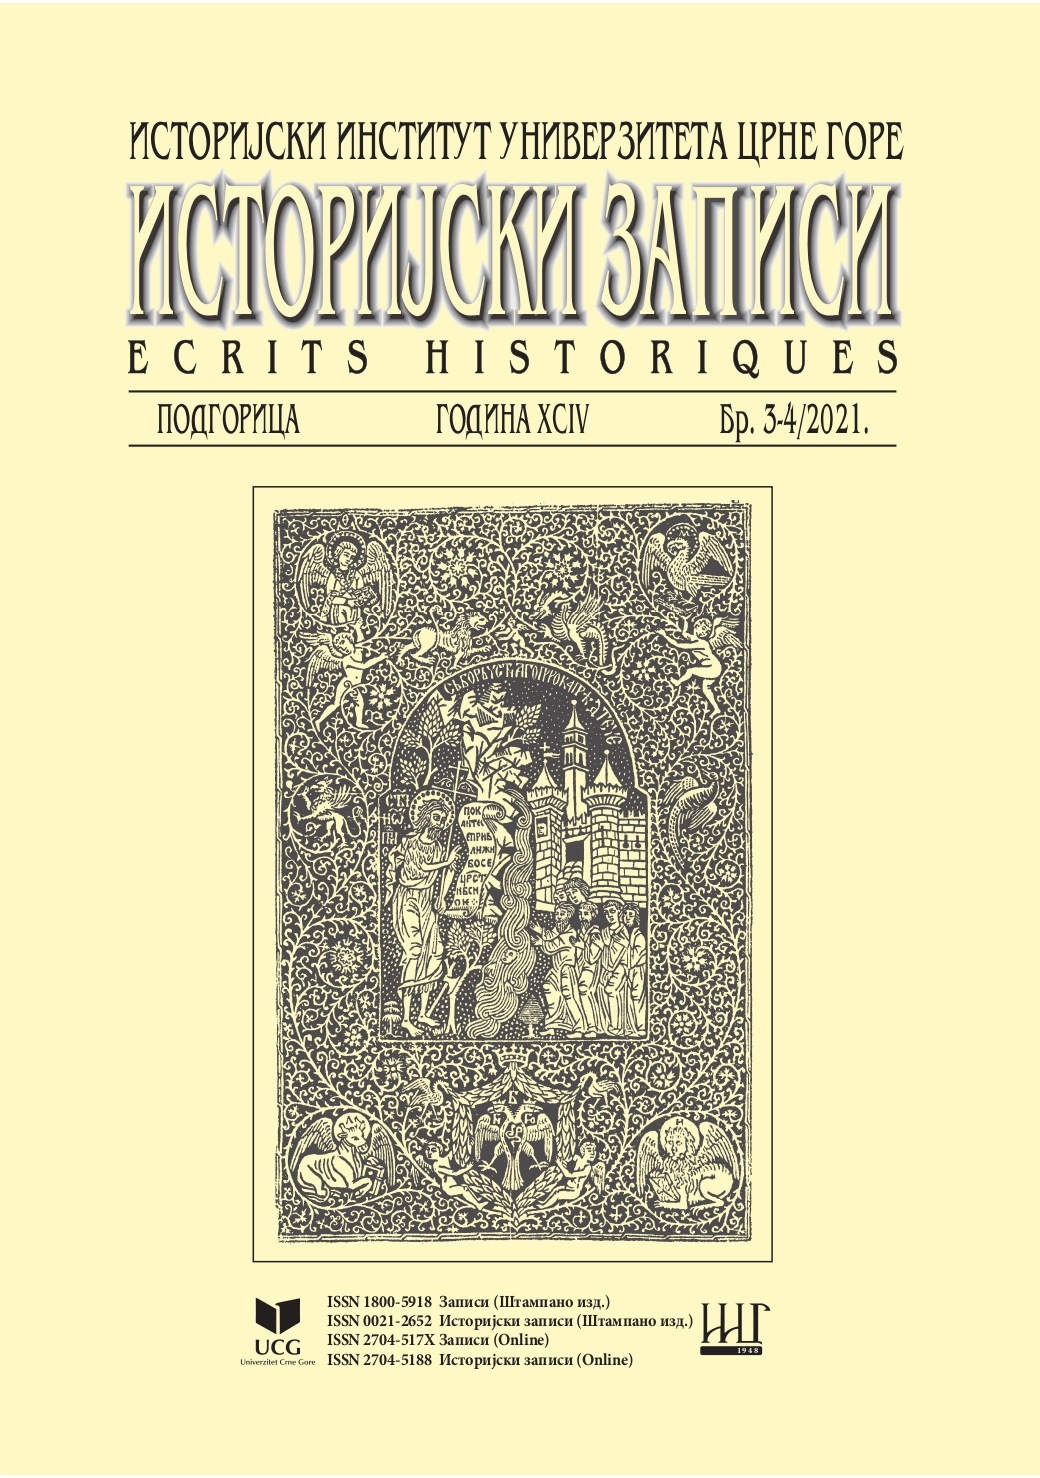 PETAR ŠOBAJIĆ‘S IDEAS ON EARLY MEDIEVAL ETHNIC MINGLING IN BJELOPAVLIĆI Cover Image